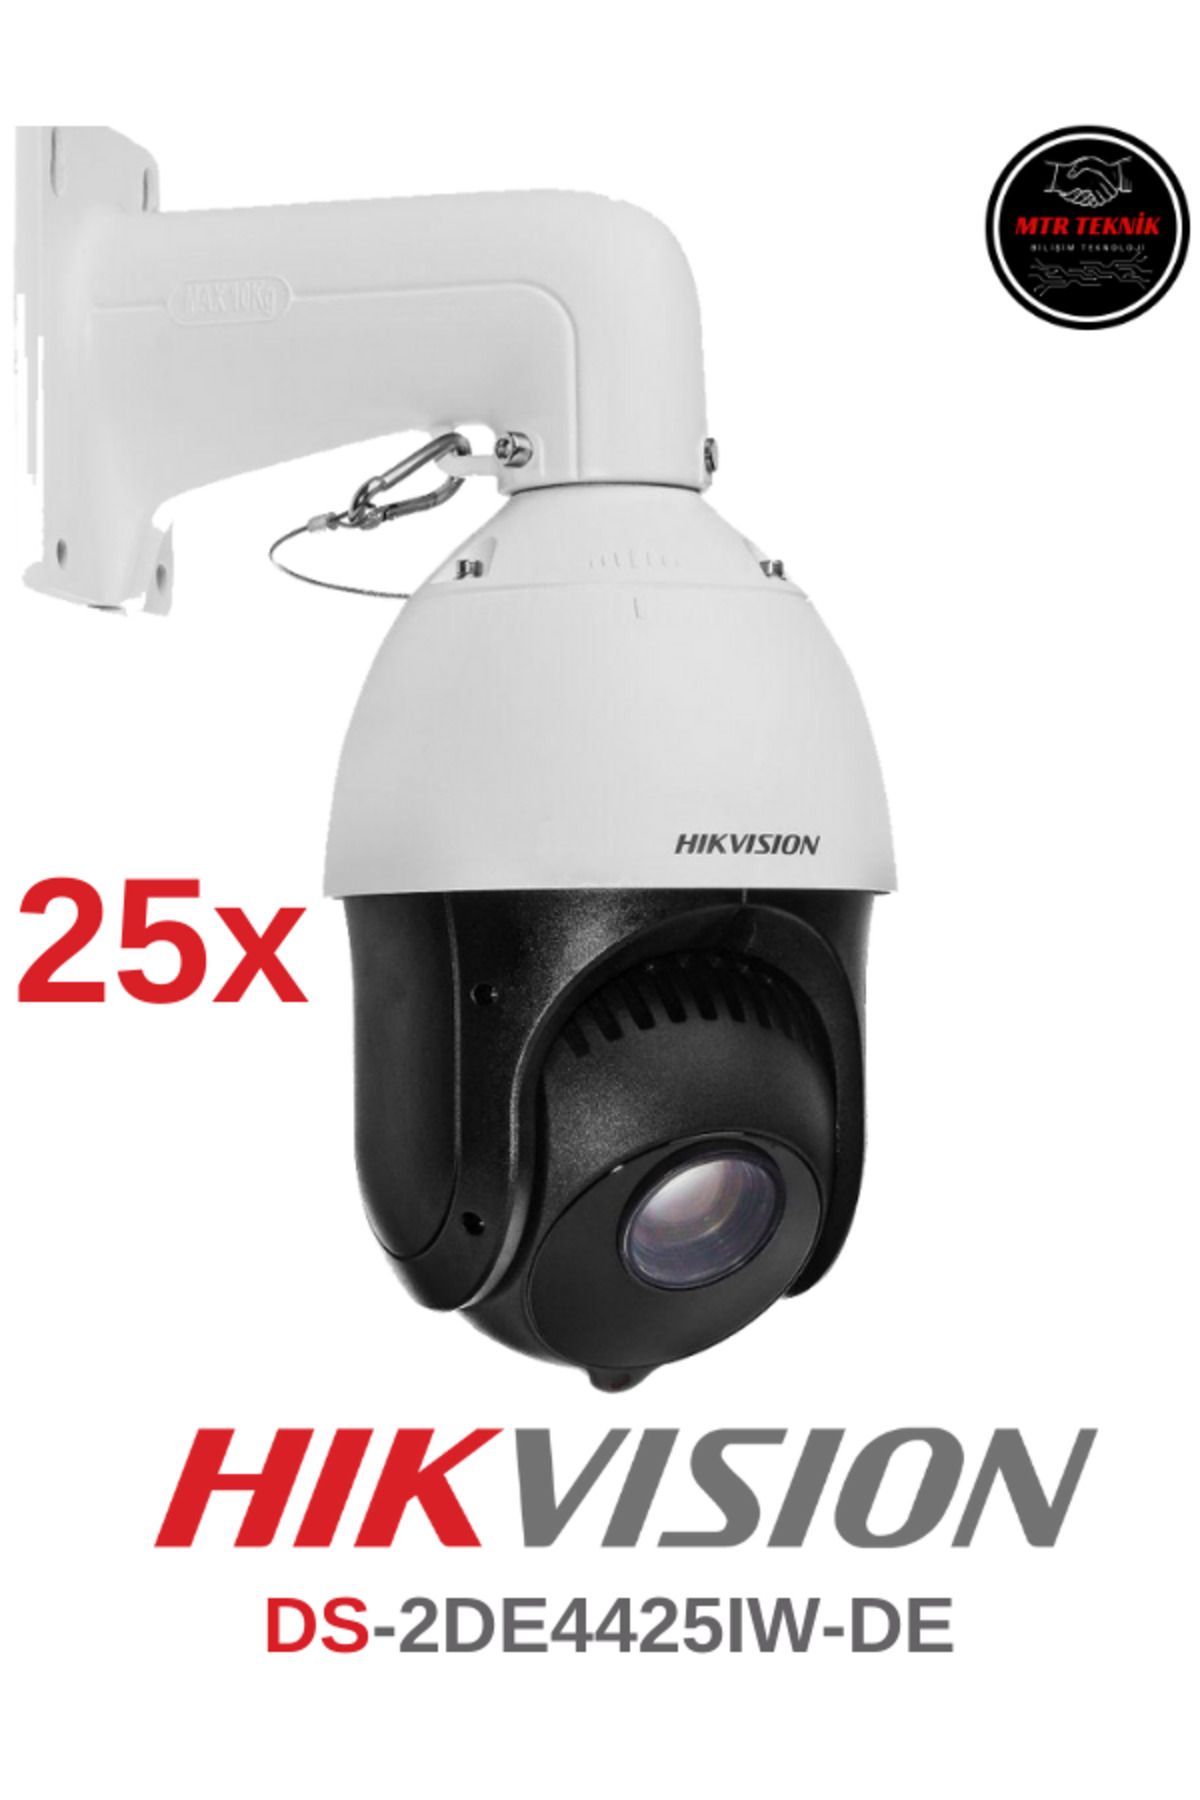 Hikvision HİKVİSİON DS-2DE4425IW-DE 4 MP 25x OPTİK ZOOM IP SPEED DOME KAMERA H.265+